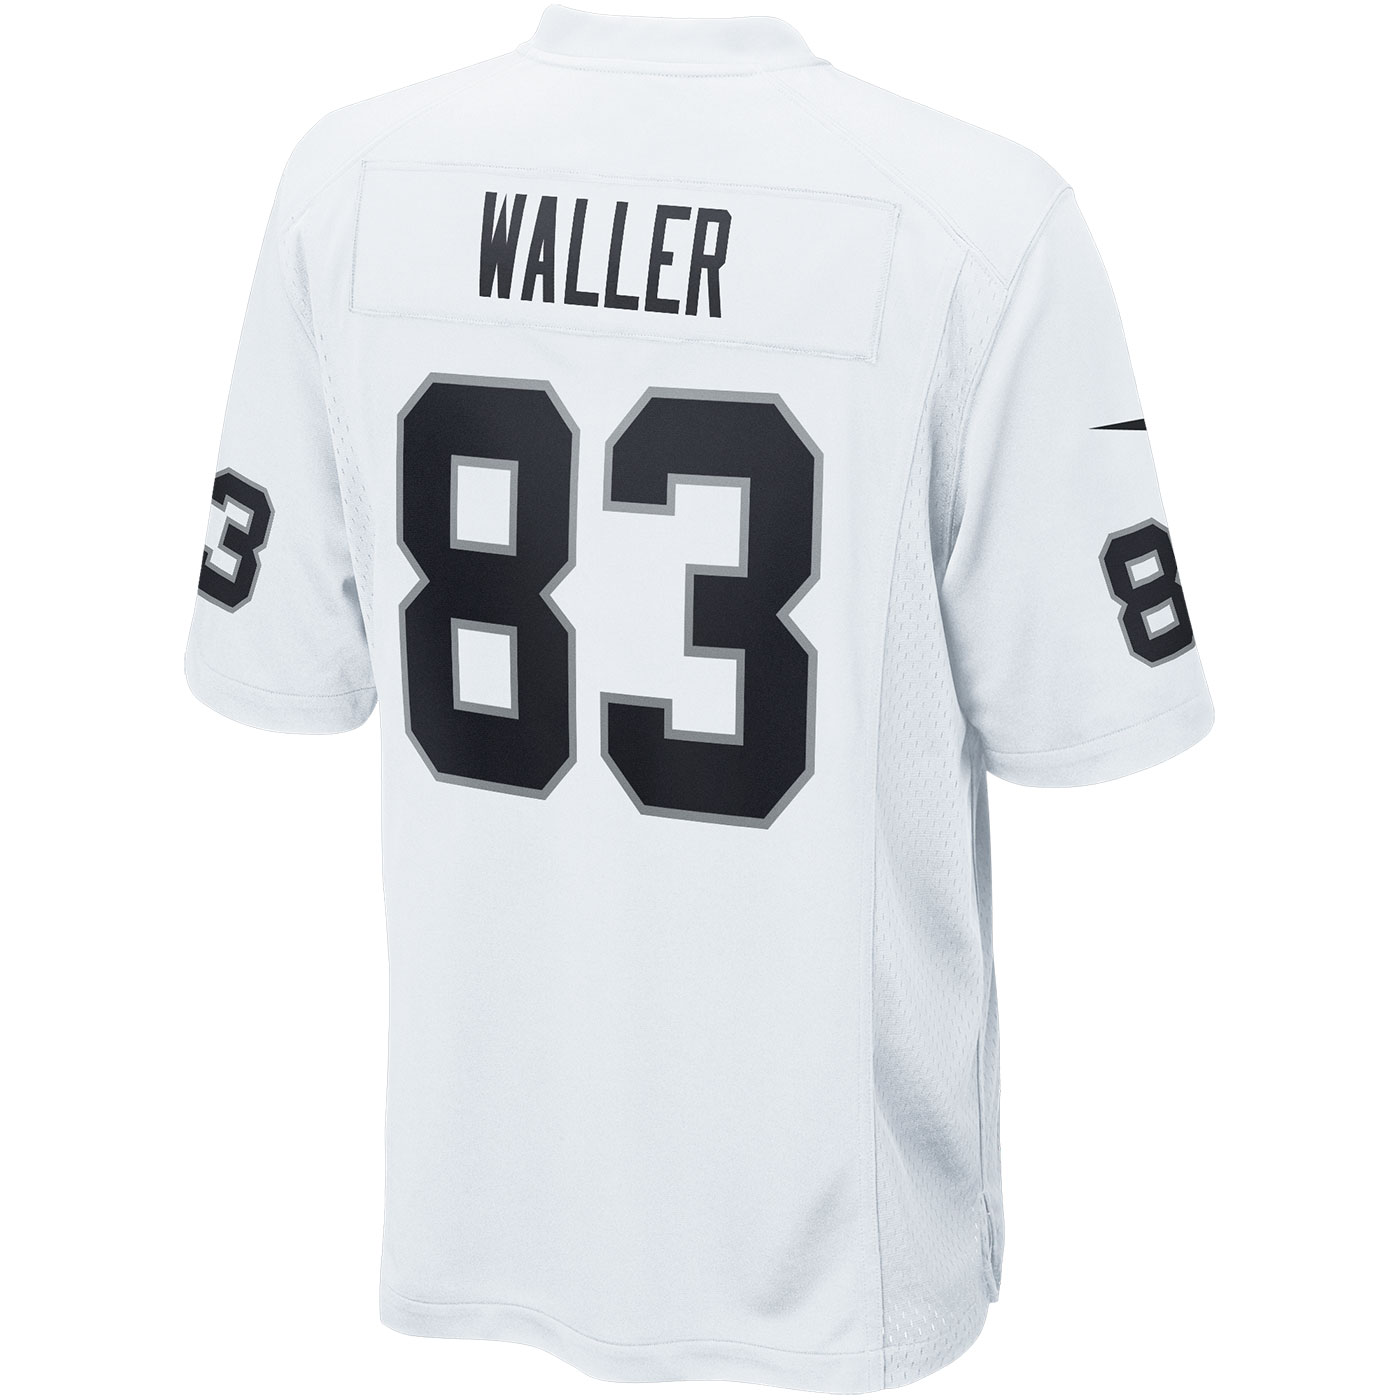 waller jersey white